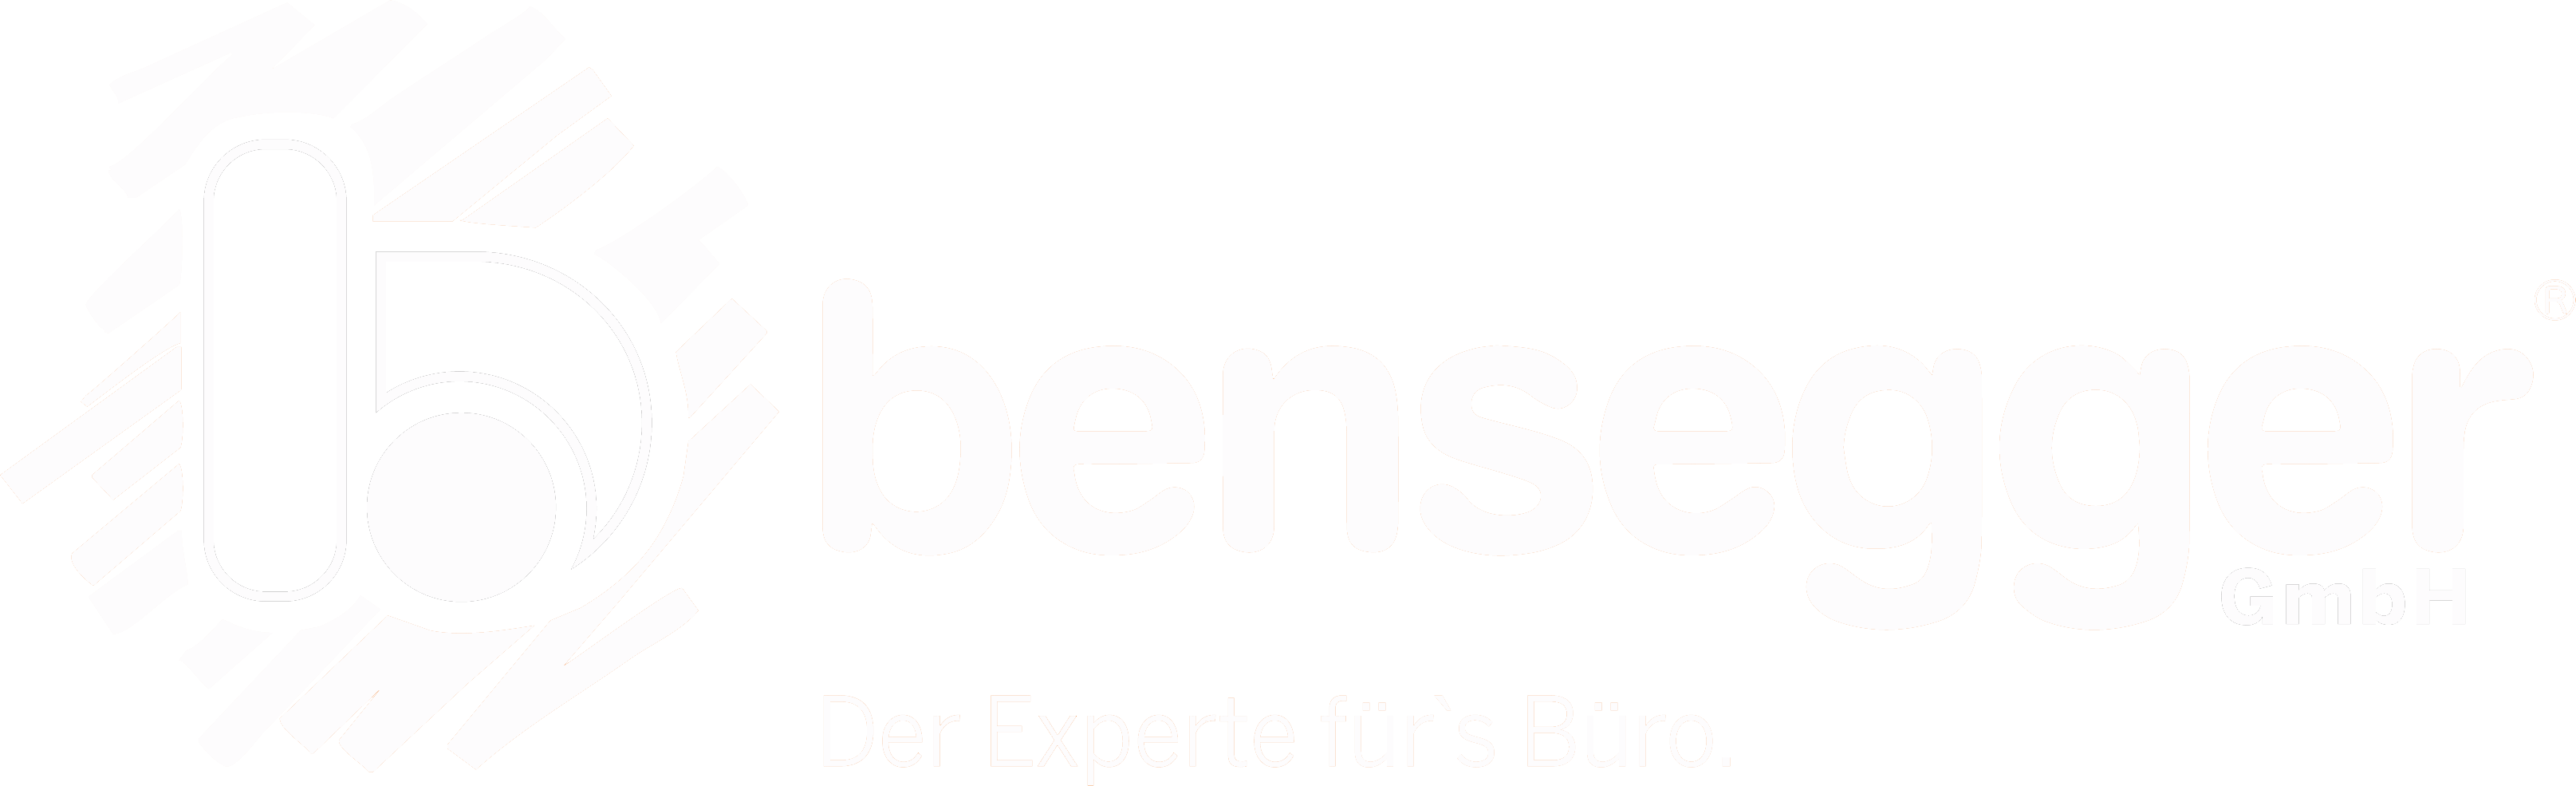 Bensegger - Der Experte fürs Büro